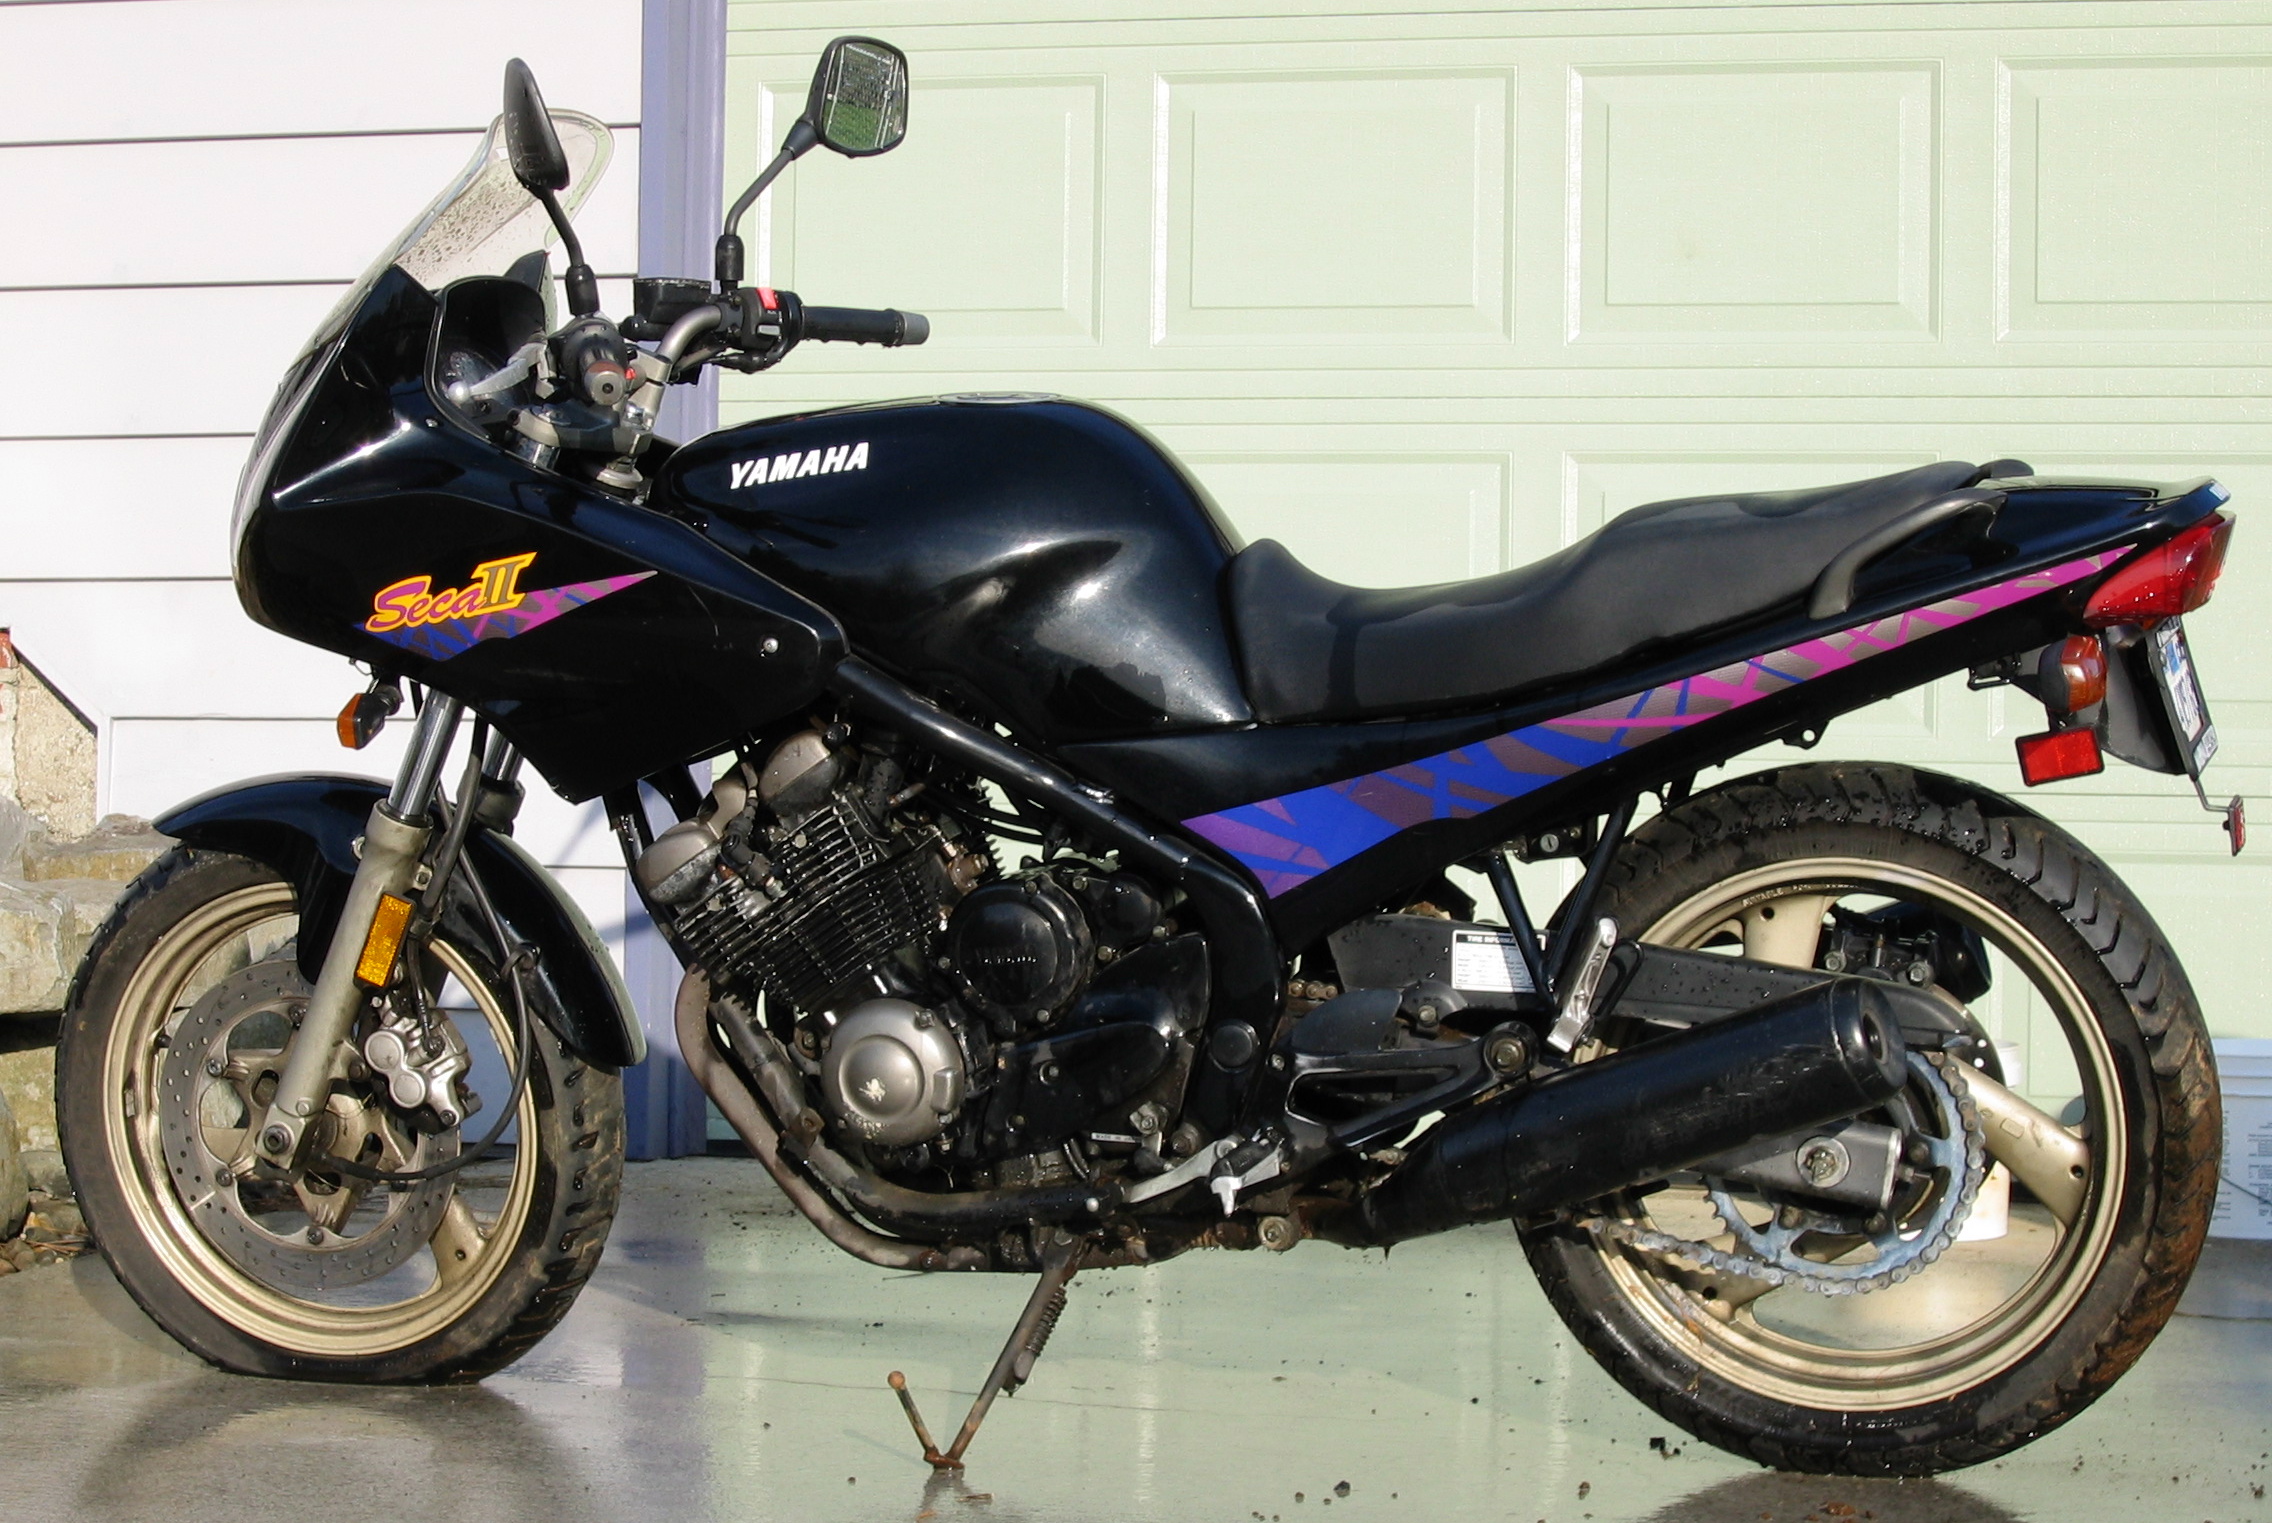 File:Yamaha-XJ600-1996.triddle.jpg - Wikimedia Commons